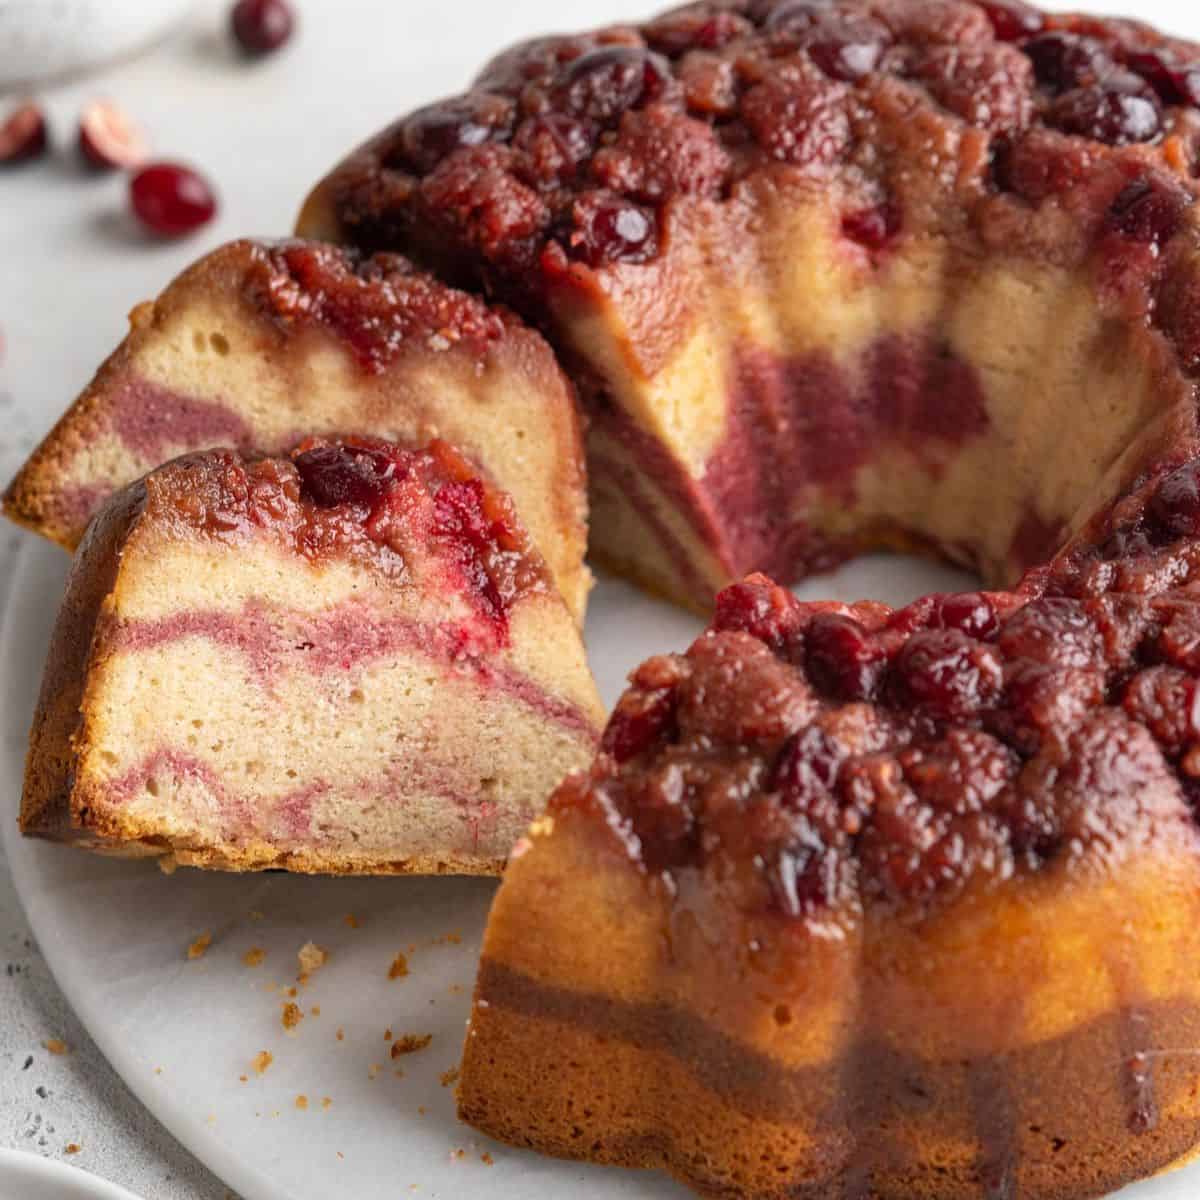 Cranberry Bundt Cake Recipe (VIDEO) 